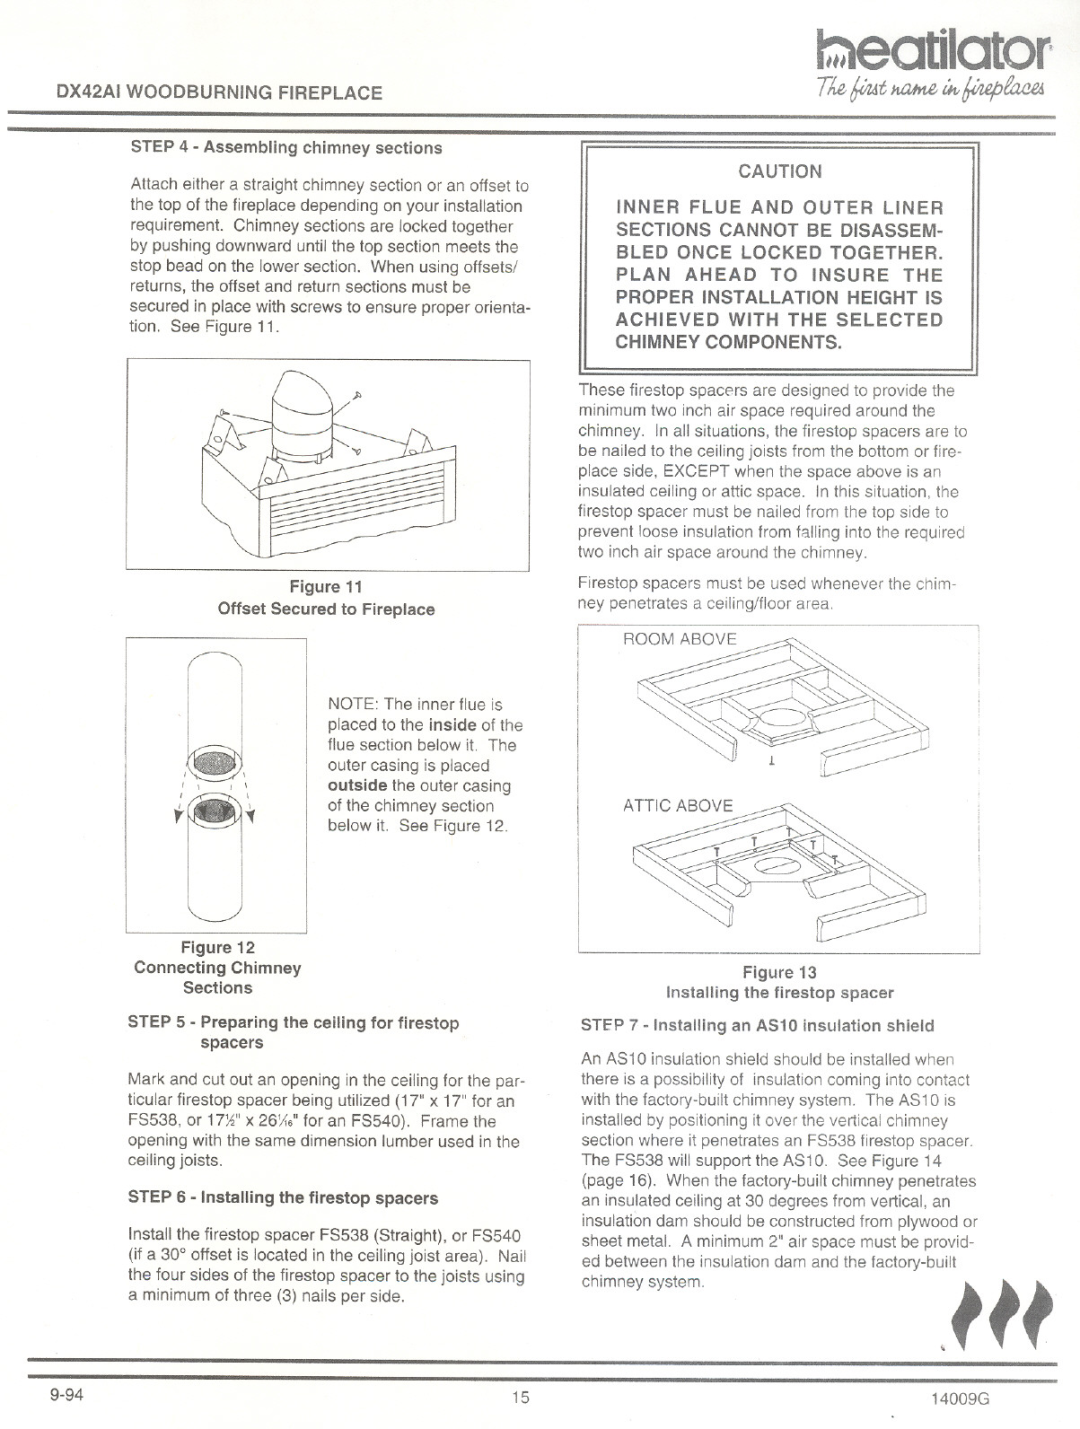 Heatiator DX42AI manual 